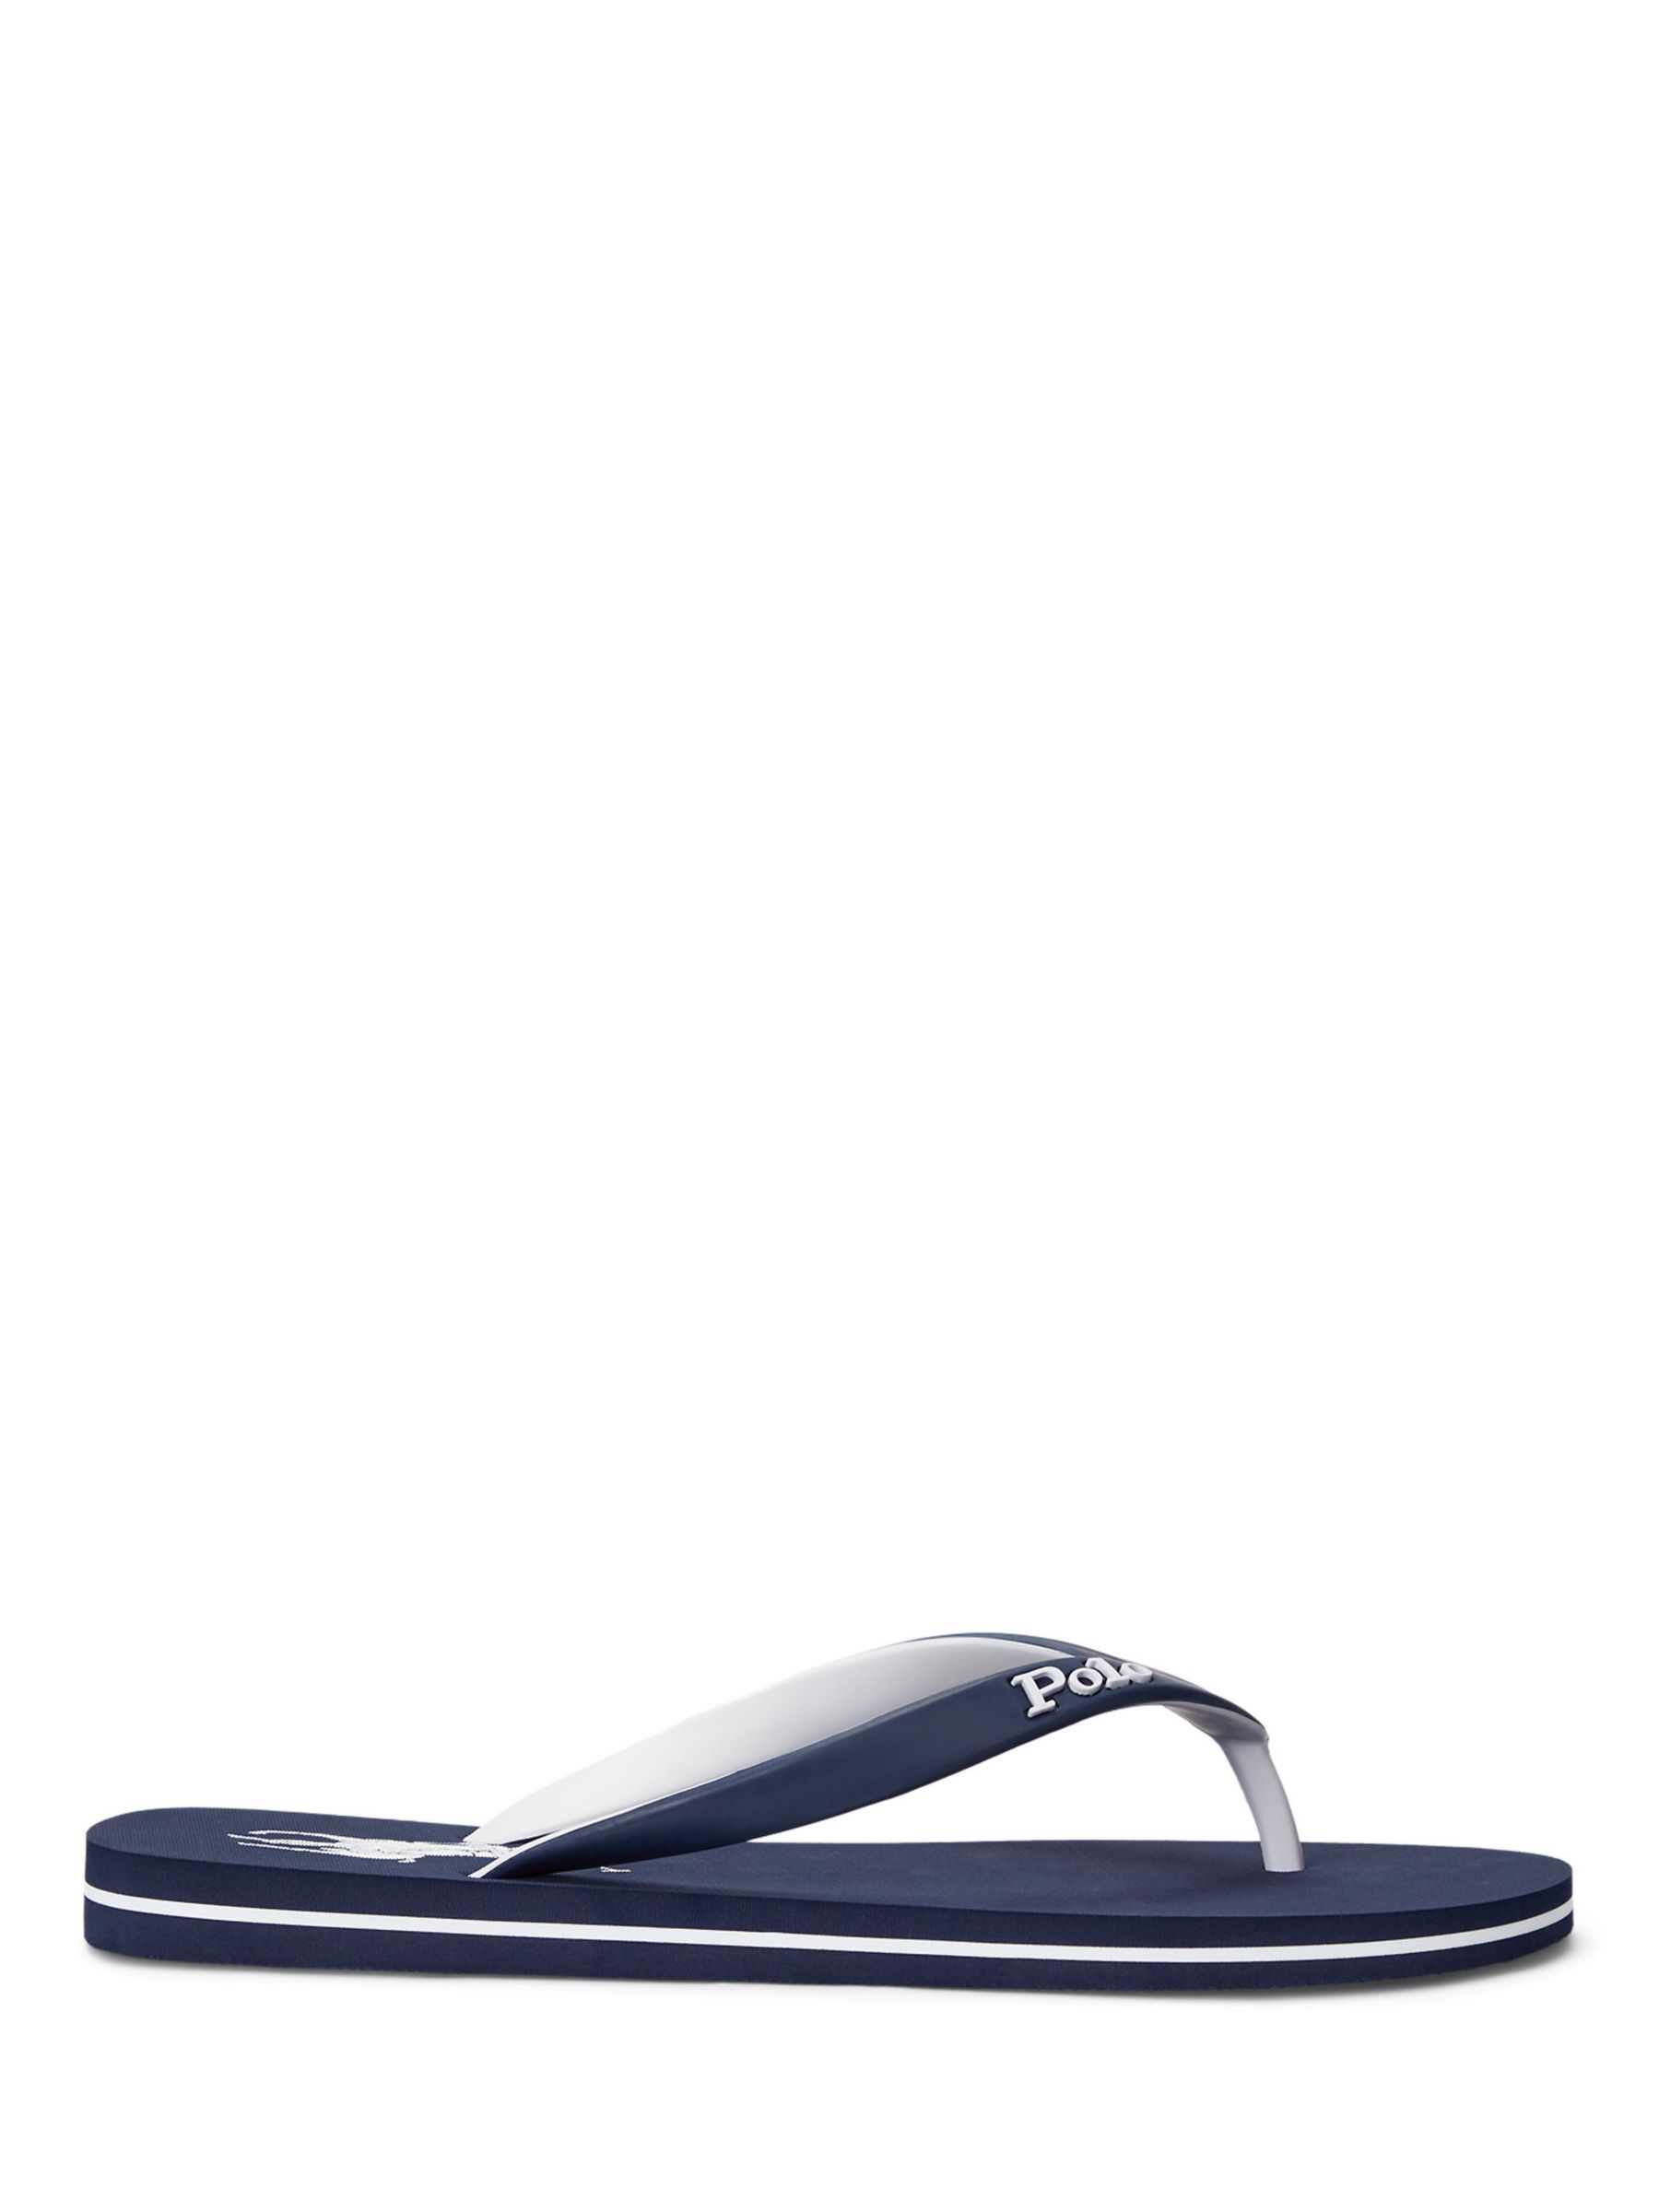 Ralph Lauren Rubber Sandals, Navy/White, 8